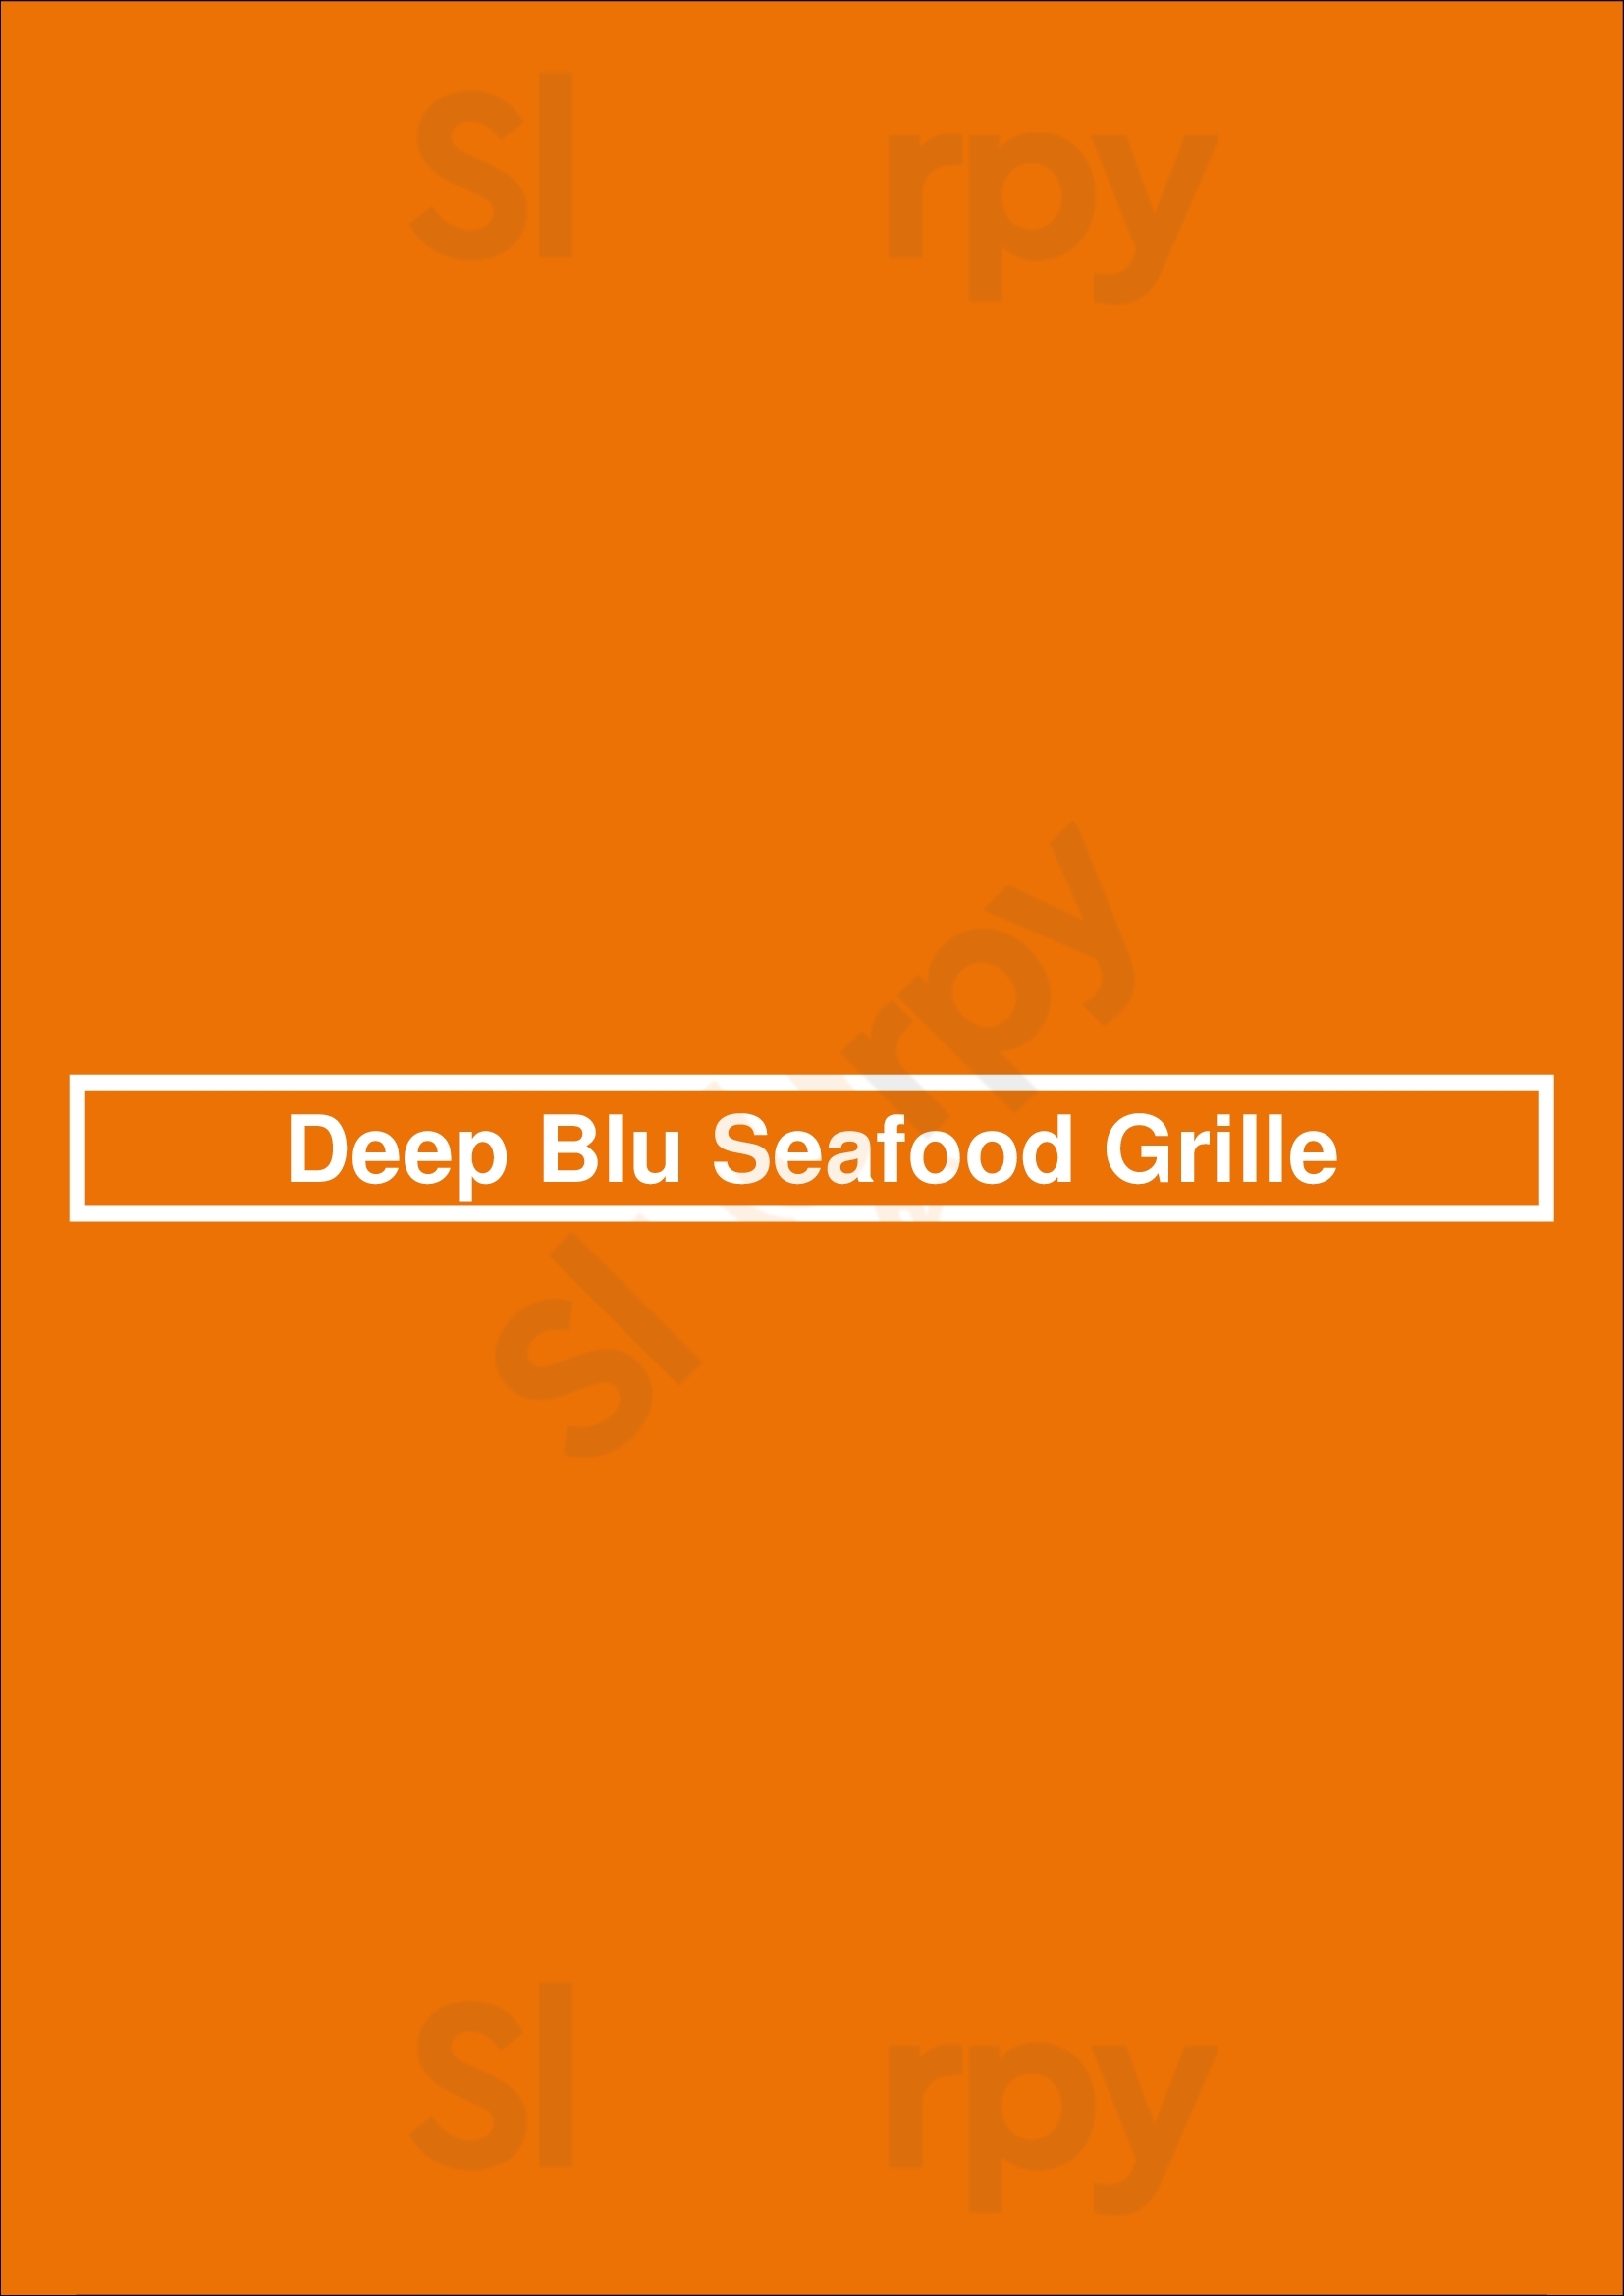 Deep Blu Seafood Grille Orlando Menu - 1